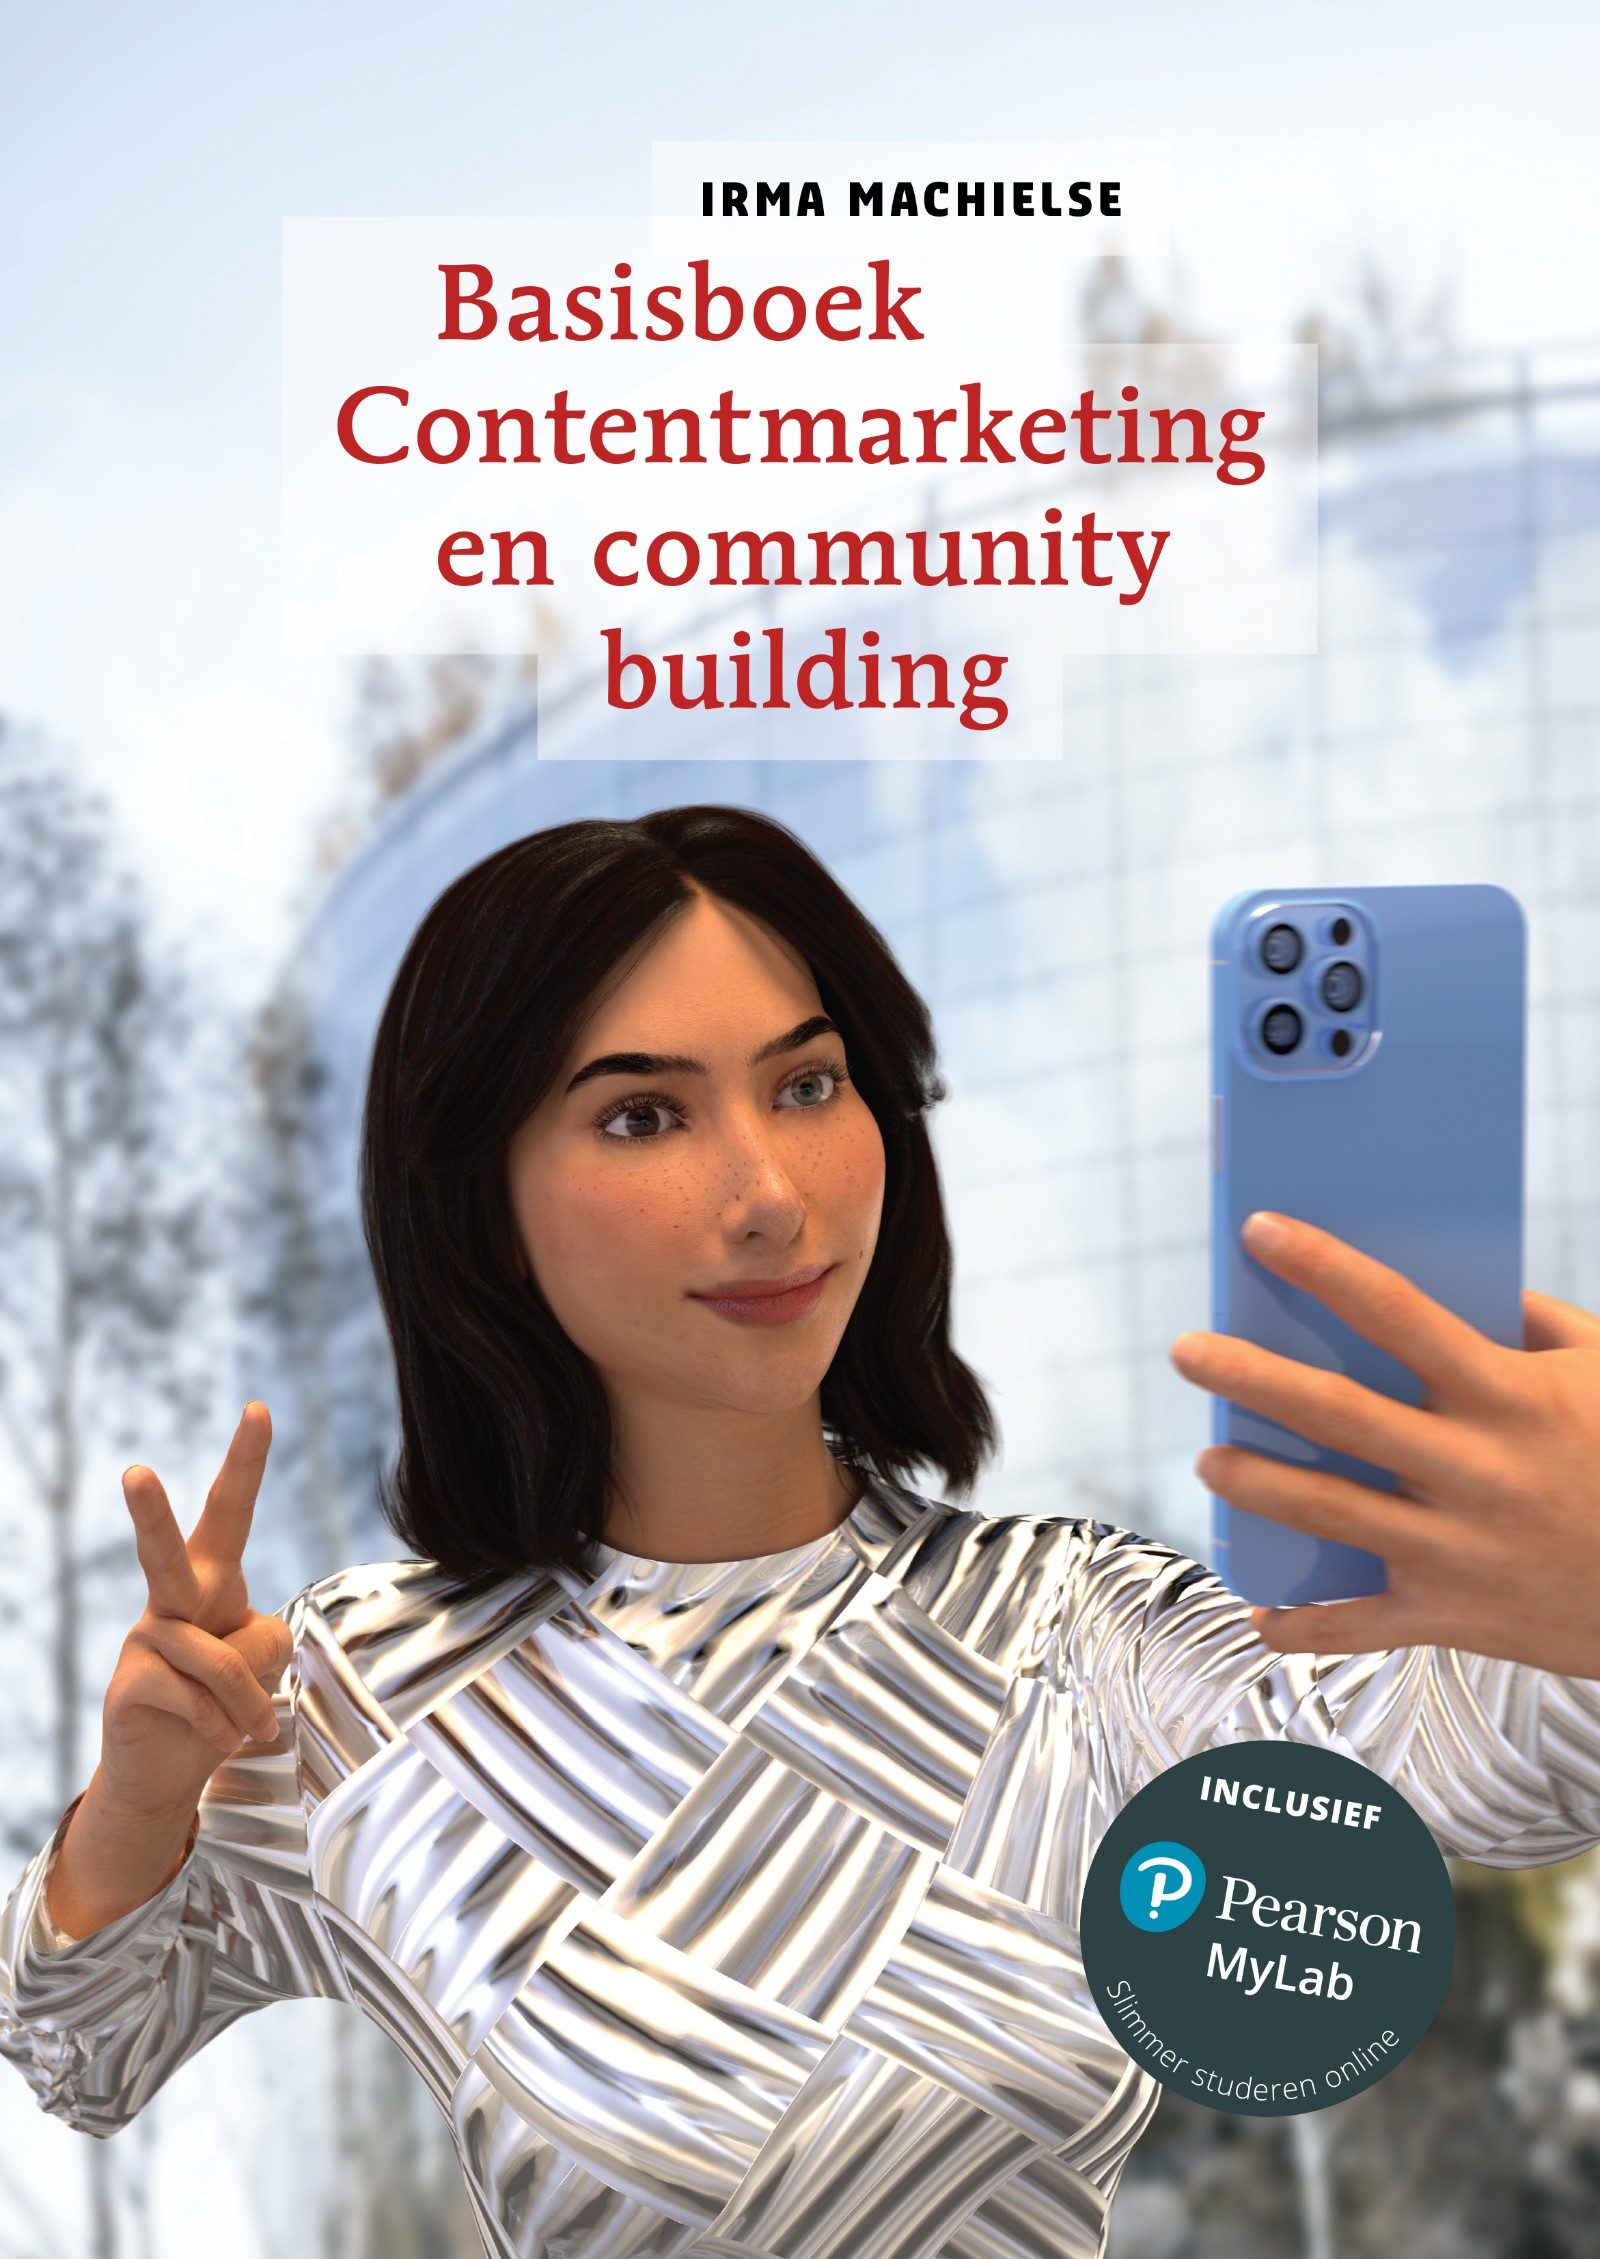 Cover Contentmarketing en community management met MyLab